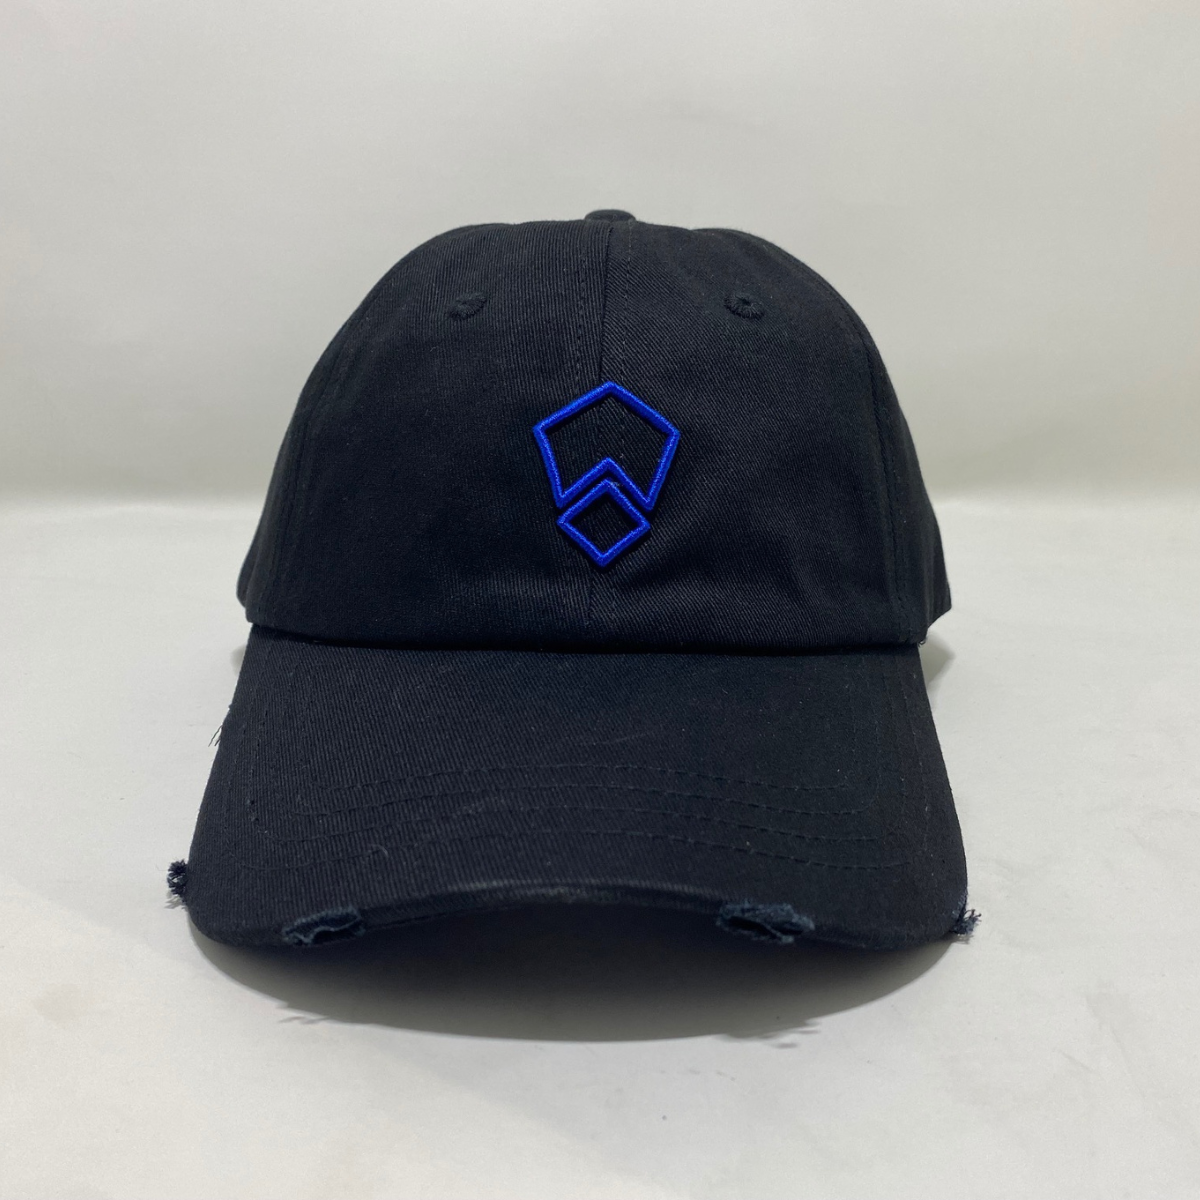 PM Hat Black with blue diamond logo